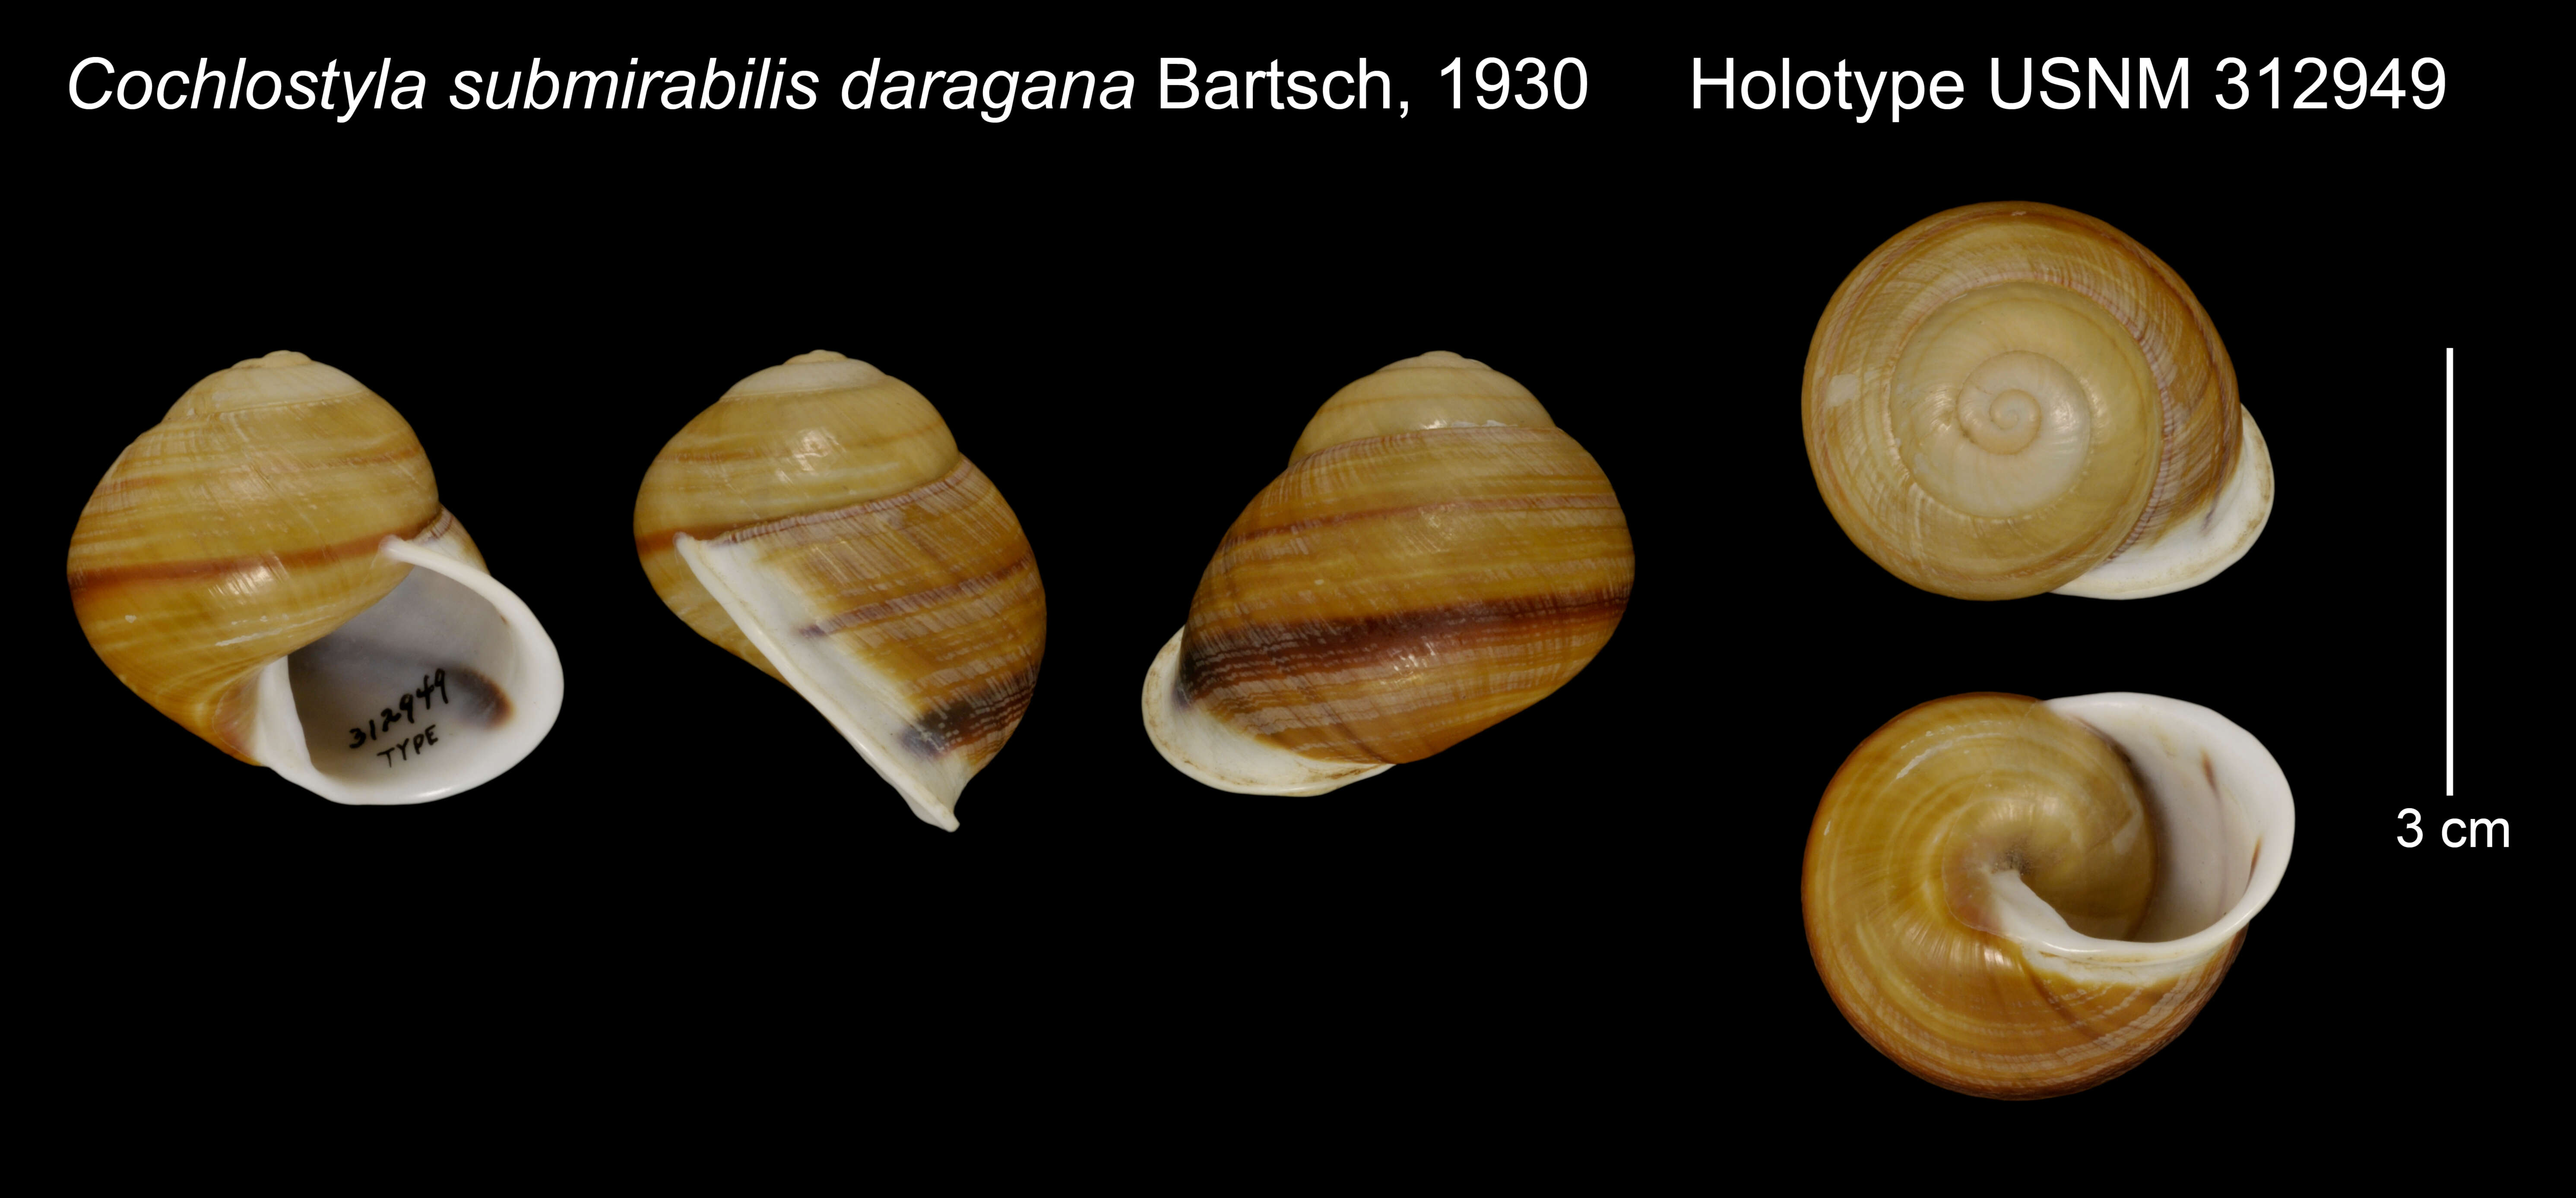 Image de Cochlostyla submirabilis daragana Bartsch